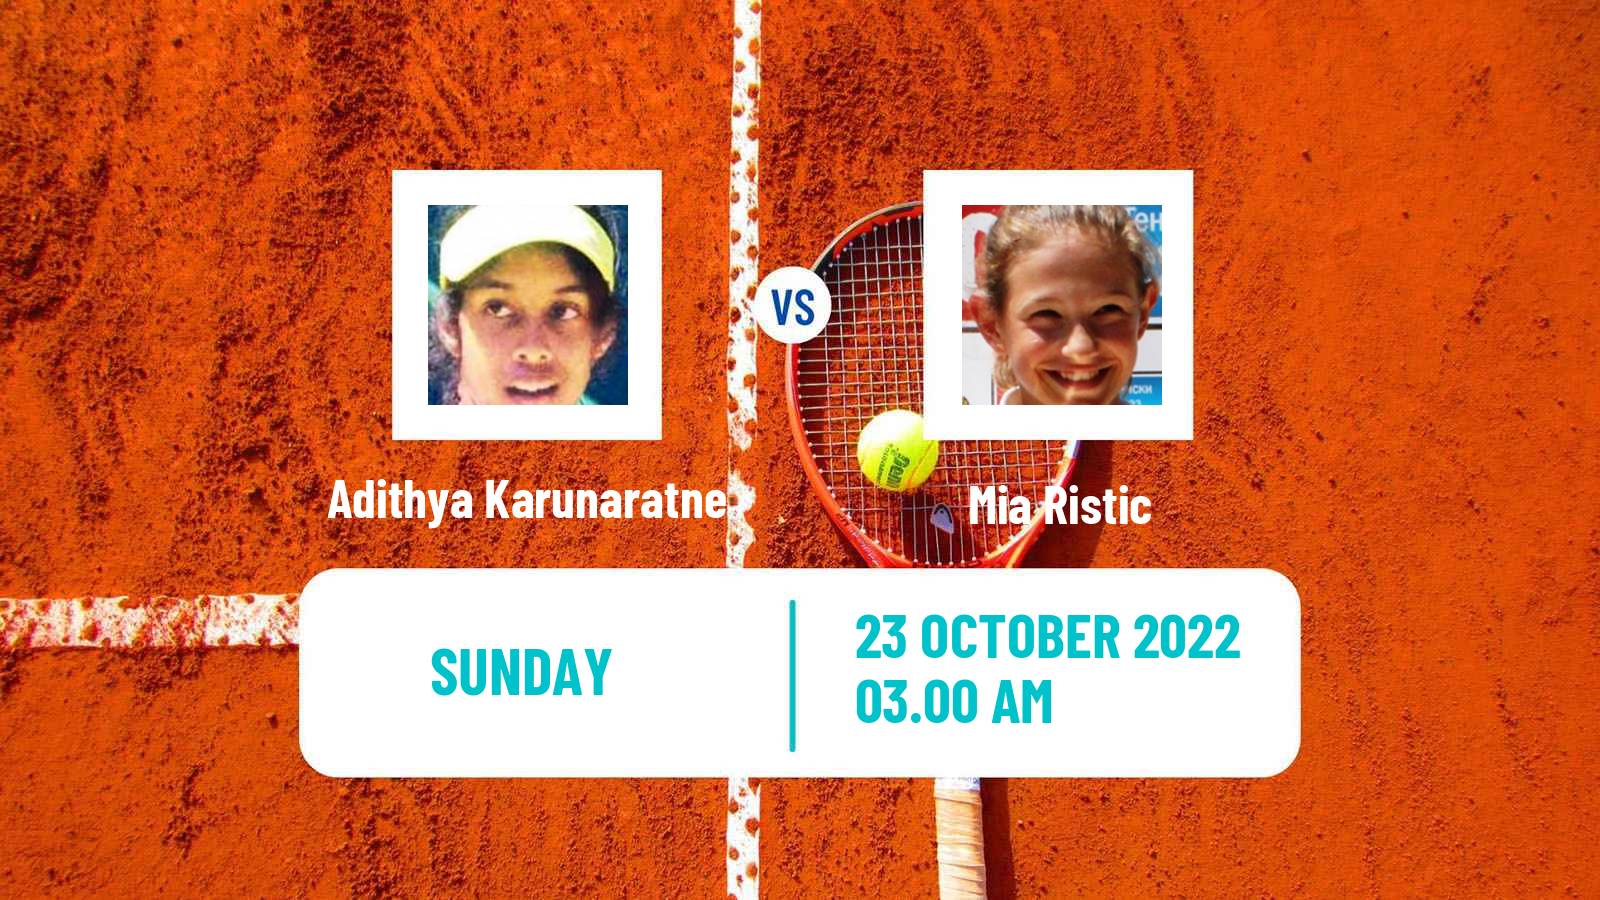 Tennis ITF Tournaments Adithya Karunaratne - Mia Ristic